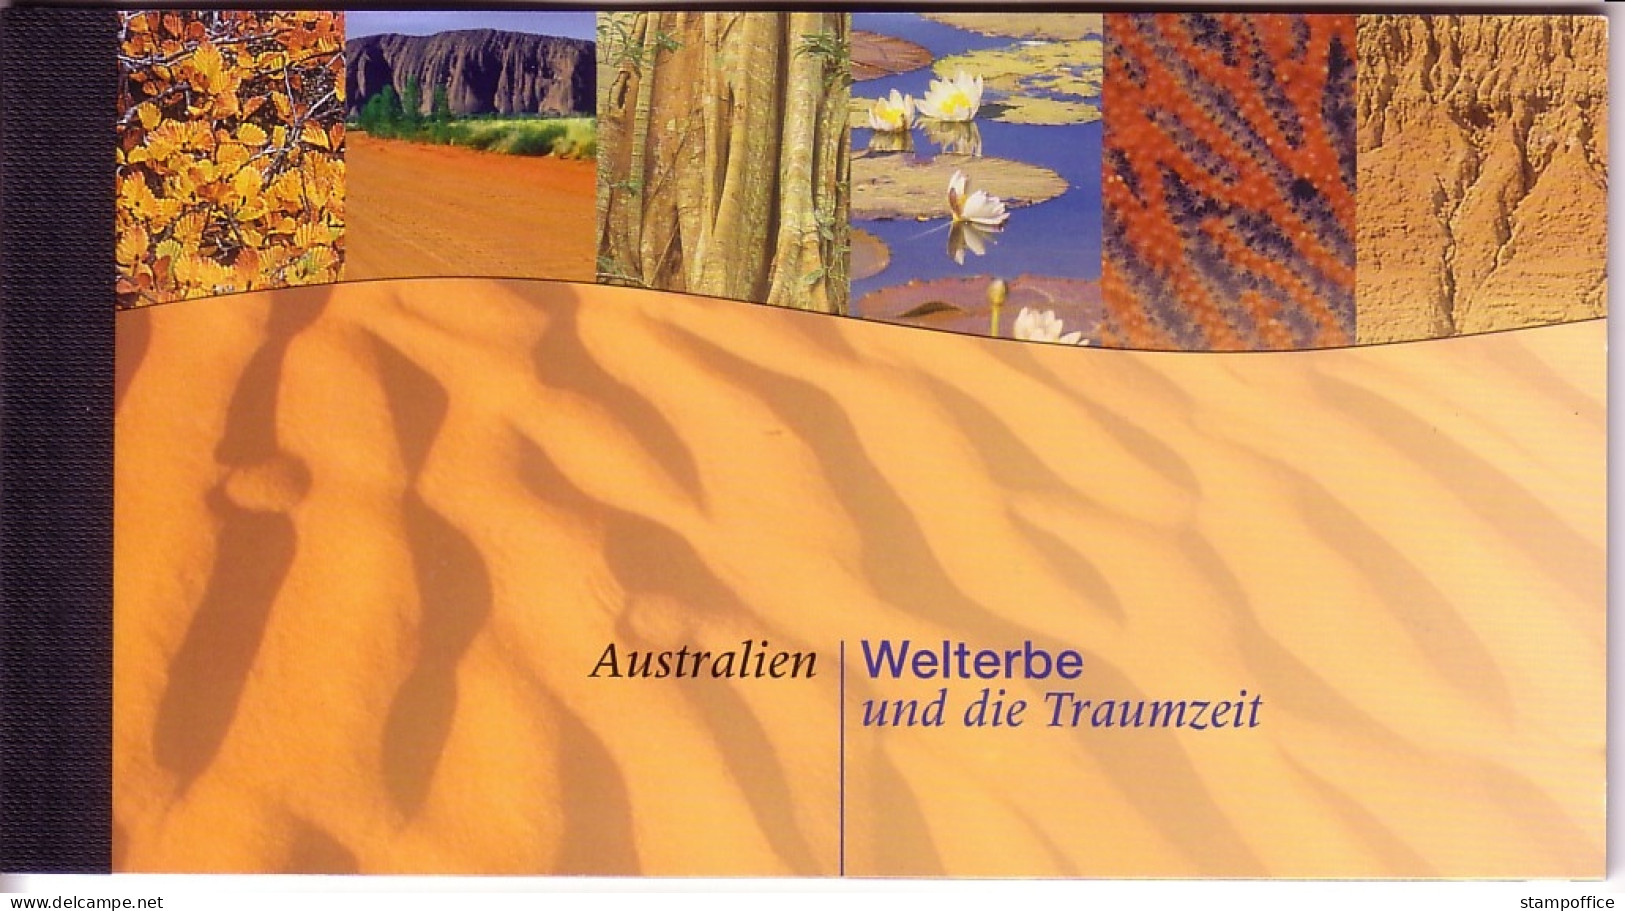 UNO WIEN MH 0-4 POSTFRISCH(MINT) UNESCO-WELTERBE AUSTRALIEN - Booklets